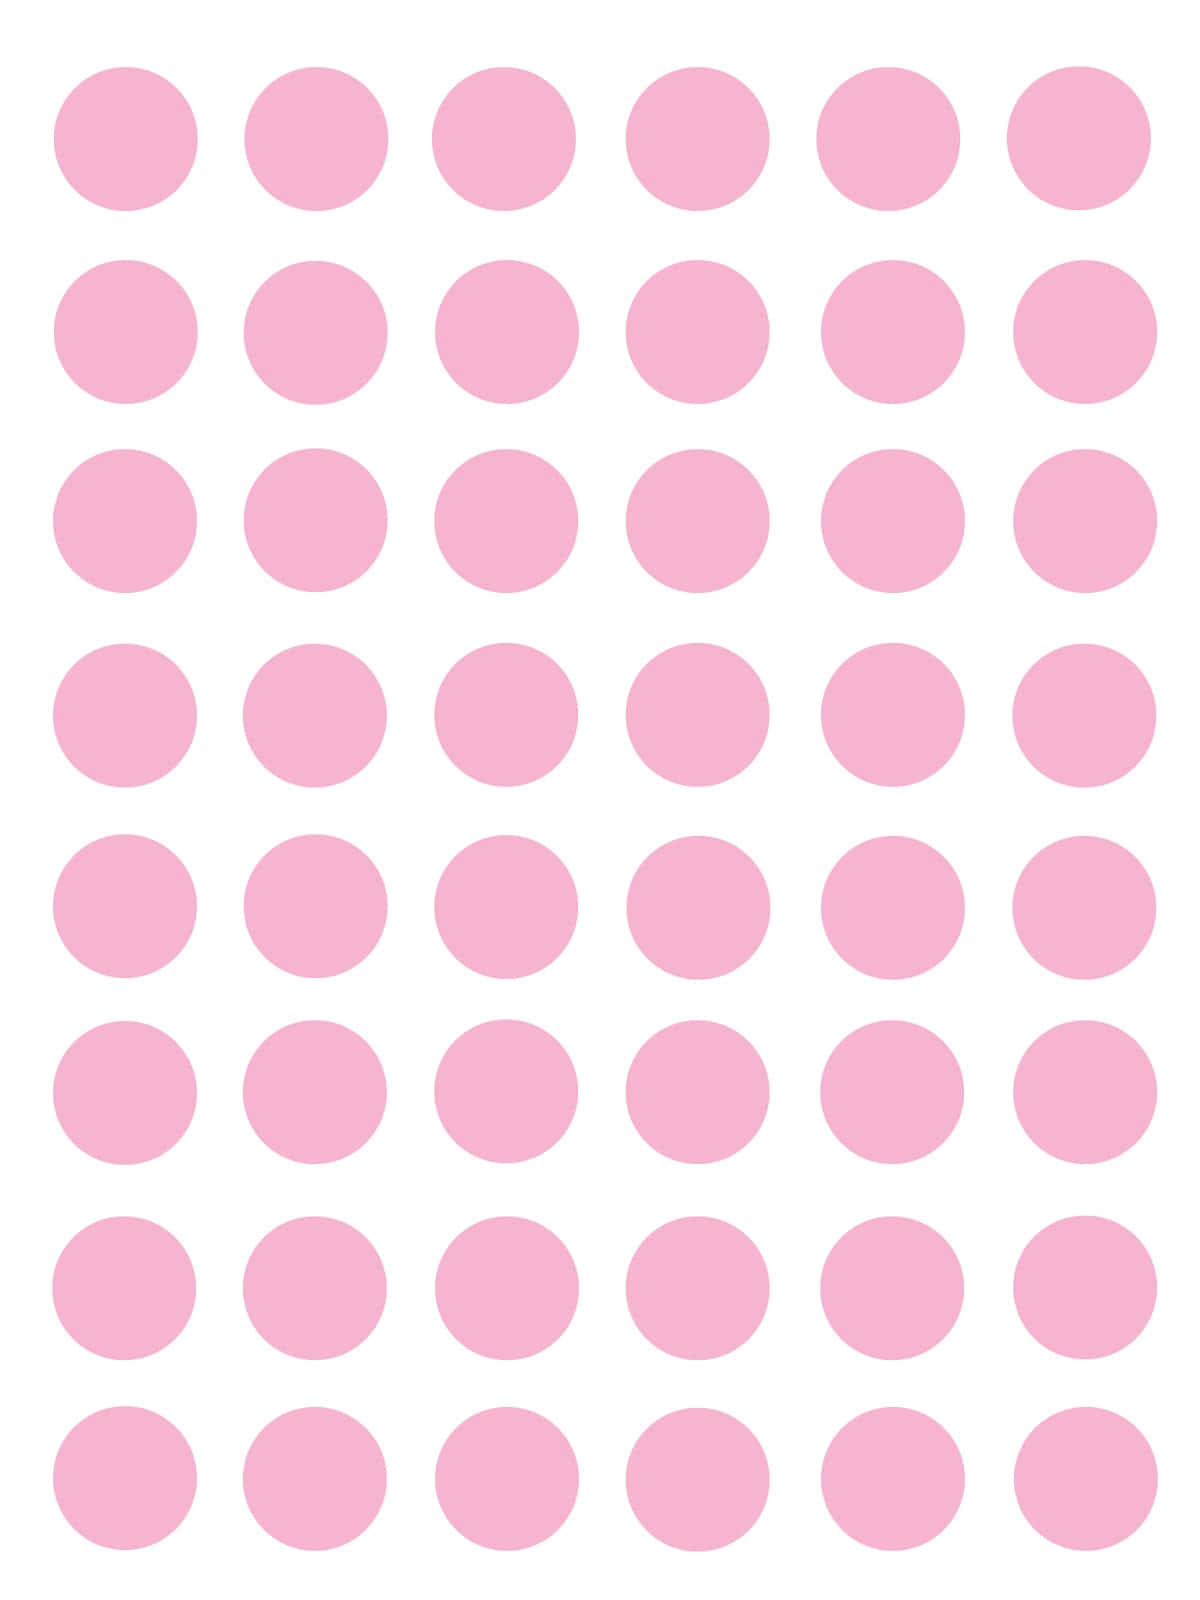 Bright pink polka dot background